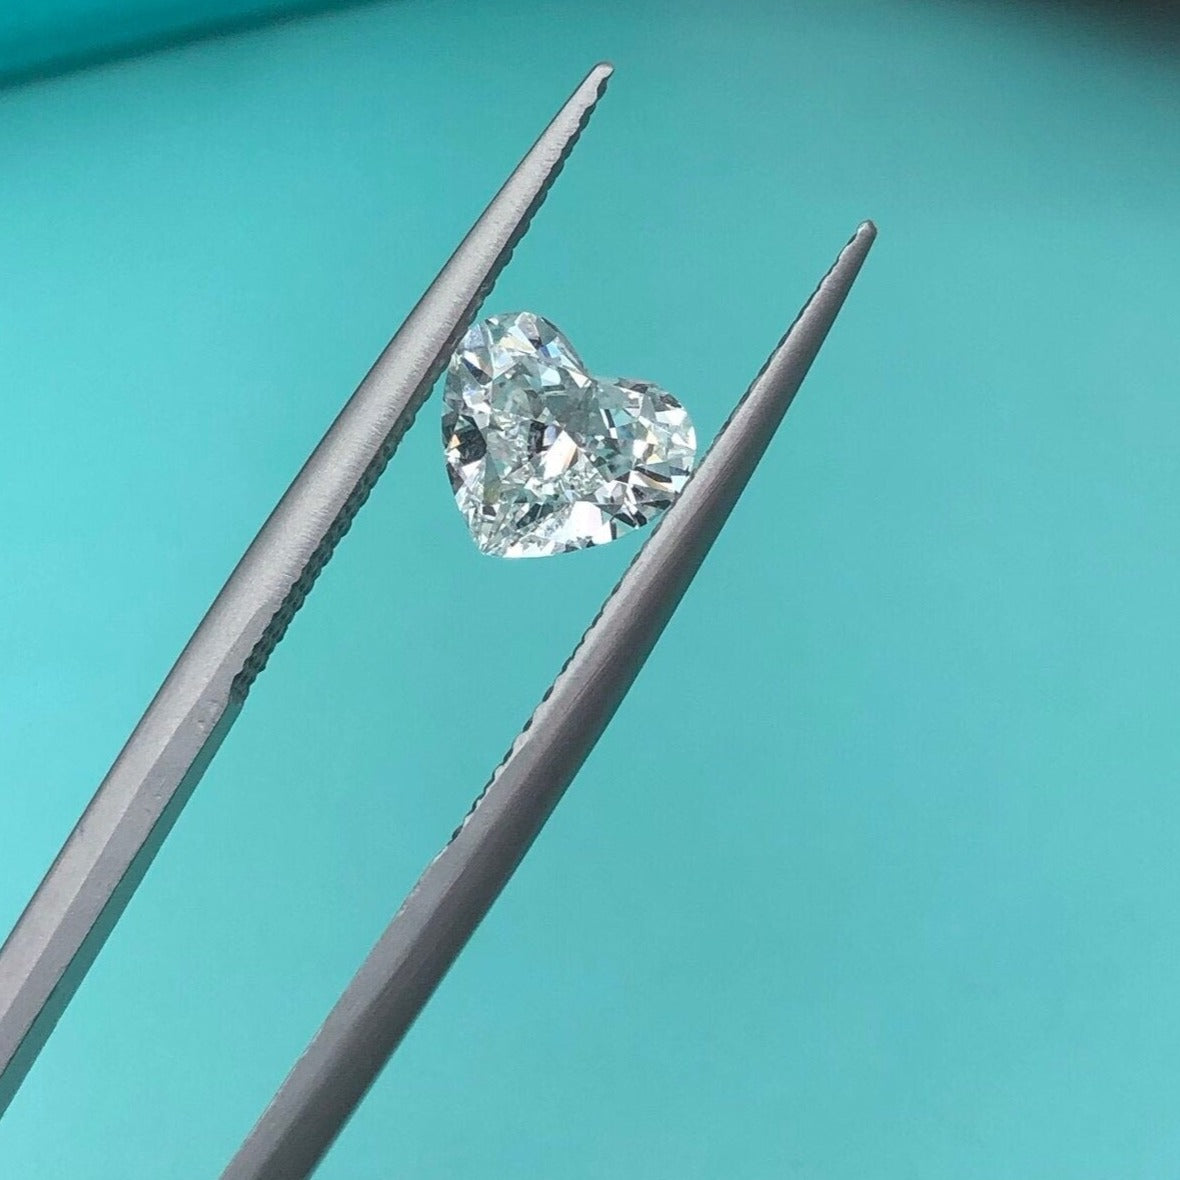 1.0 to 3.0 Carat. Heart Shape. Lab-Grown Diamonds